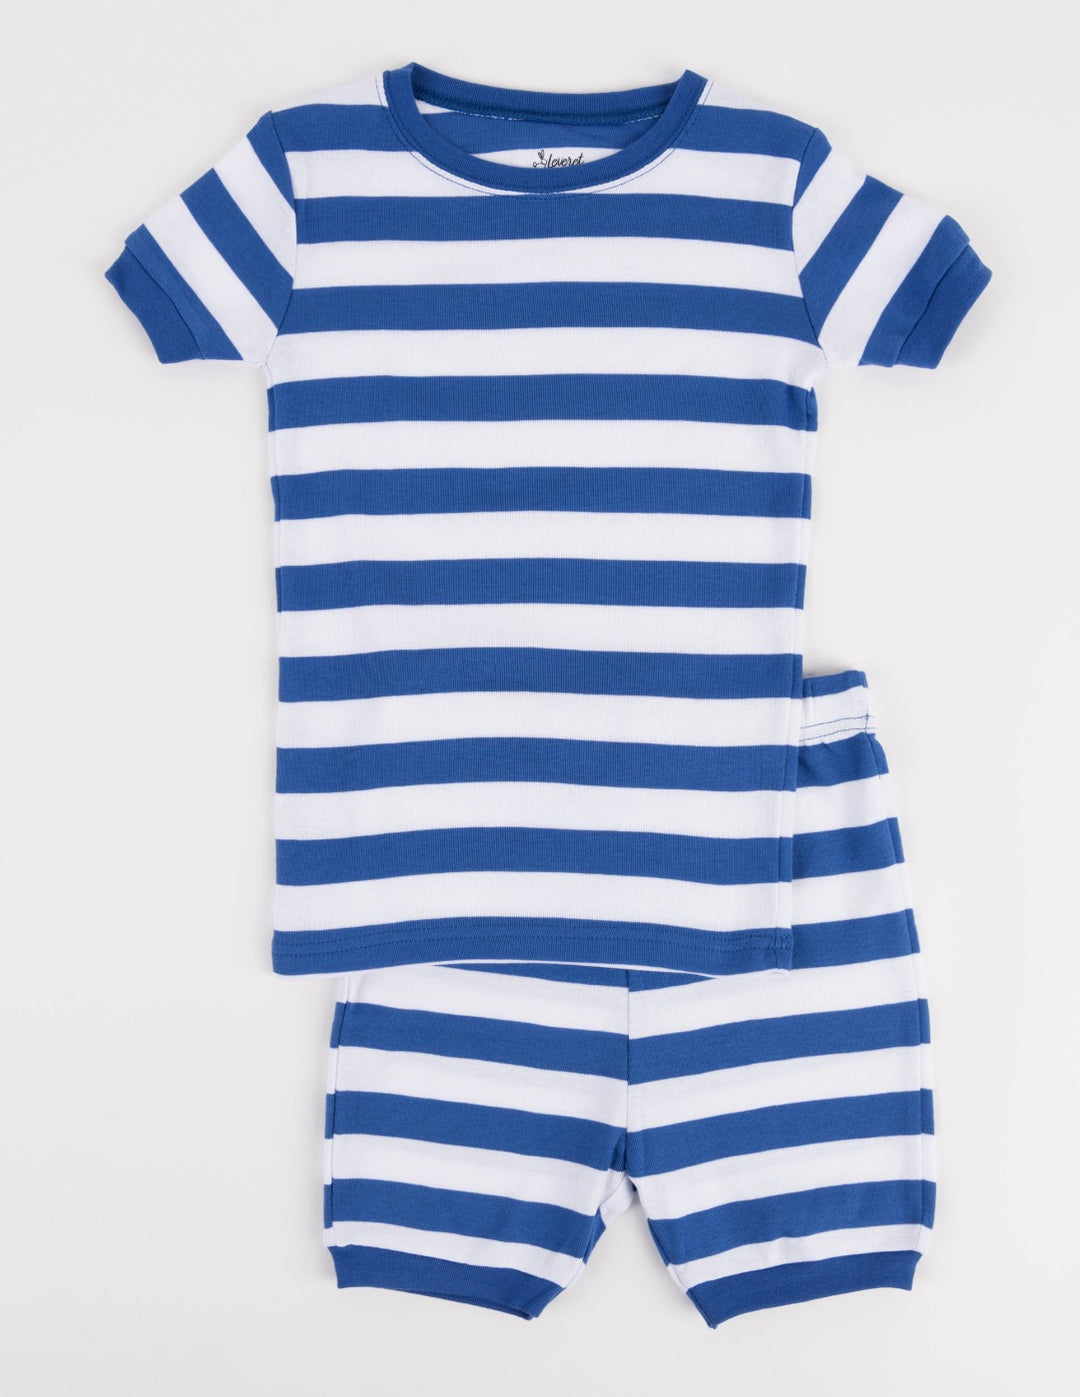 blue and white striped kids shorts pajamas